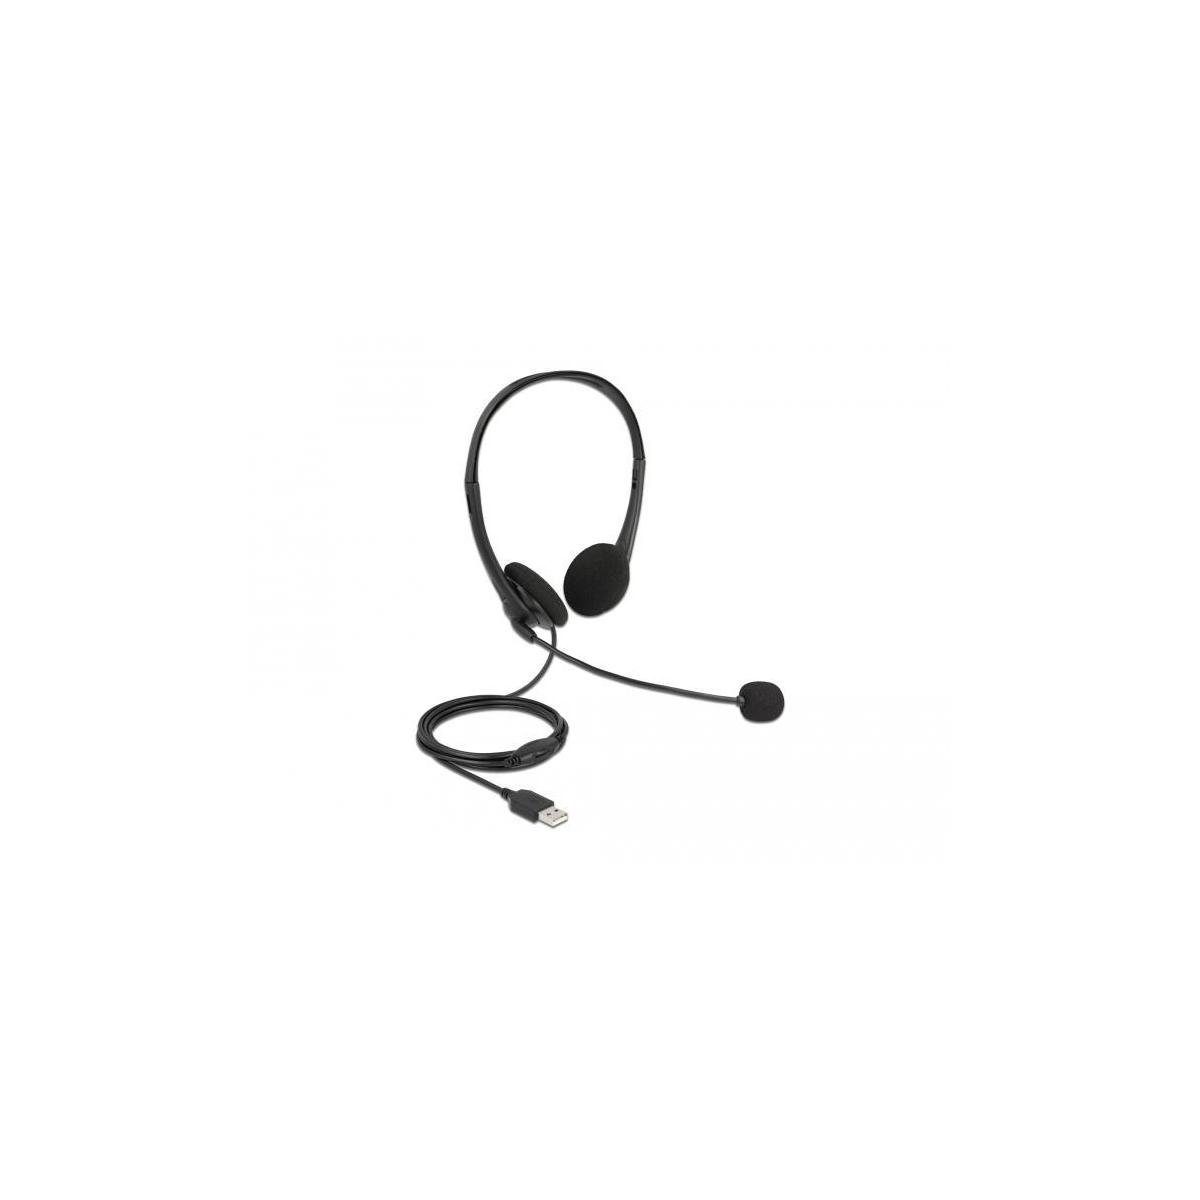 Delock USB Stereo Headset mit Lautstärkeregler für PC und Notebook Headset | Kopfhörer